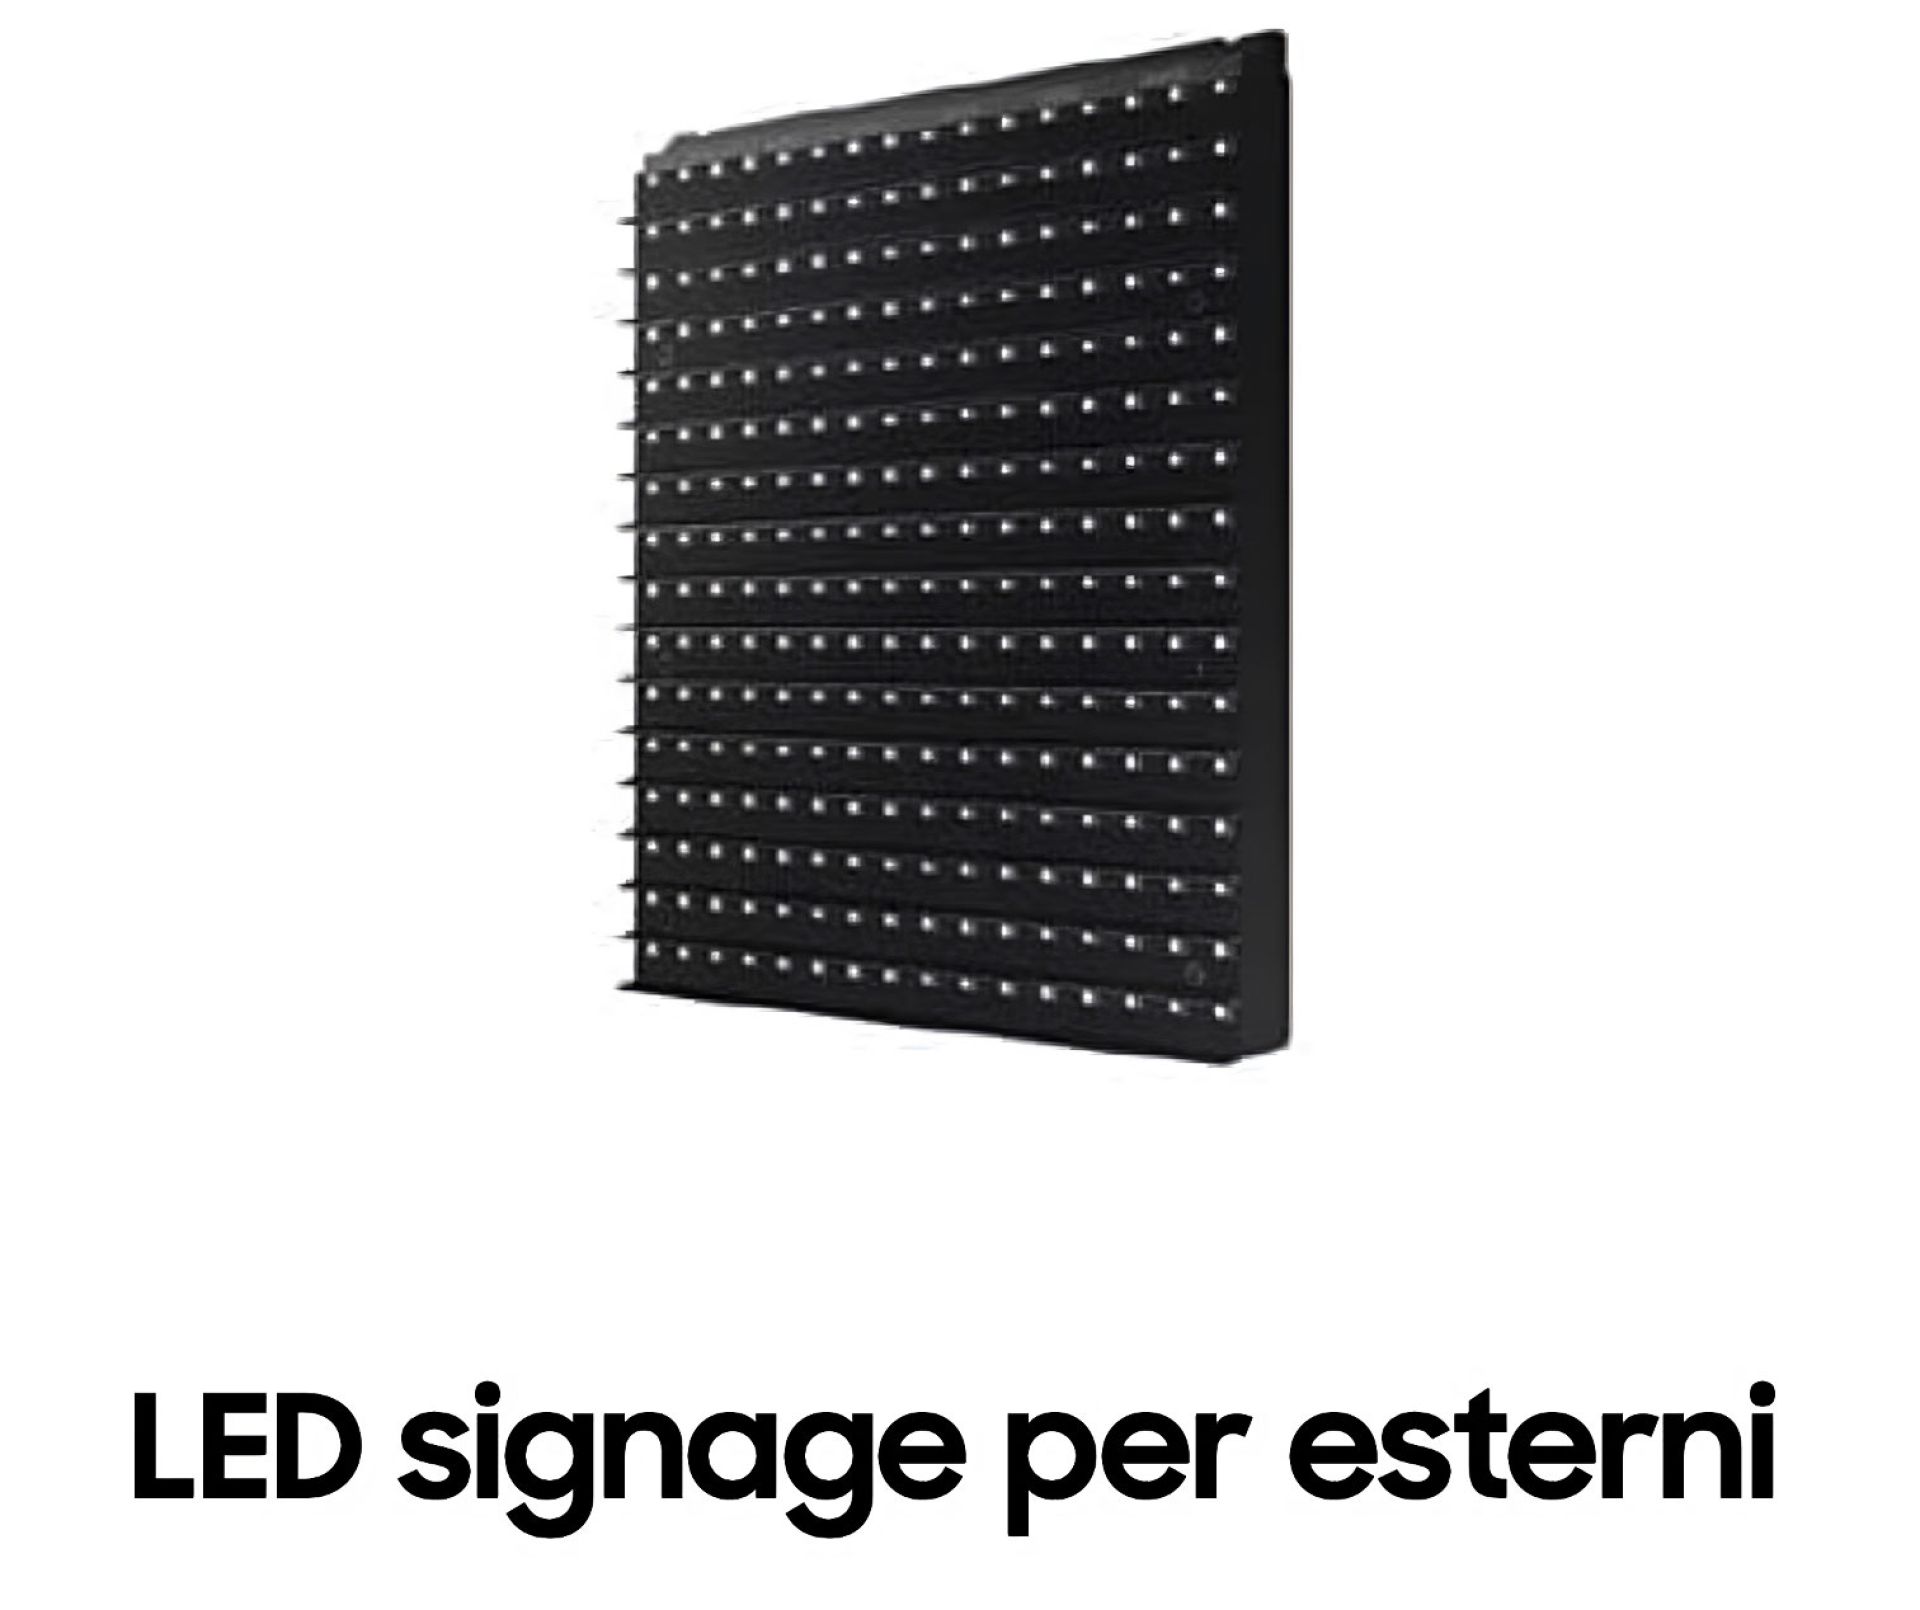 Samsung LED signage per esterni